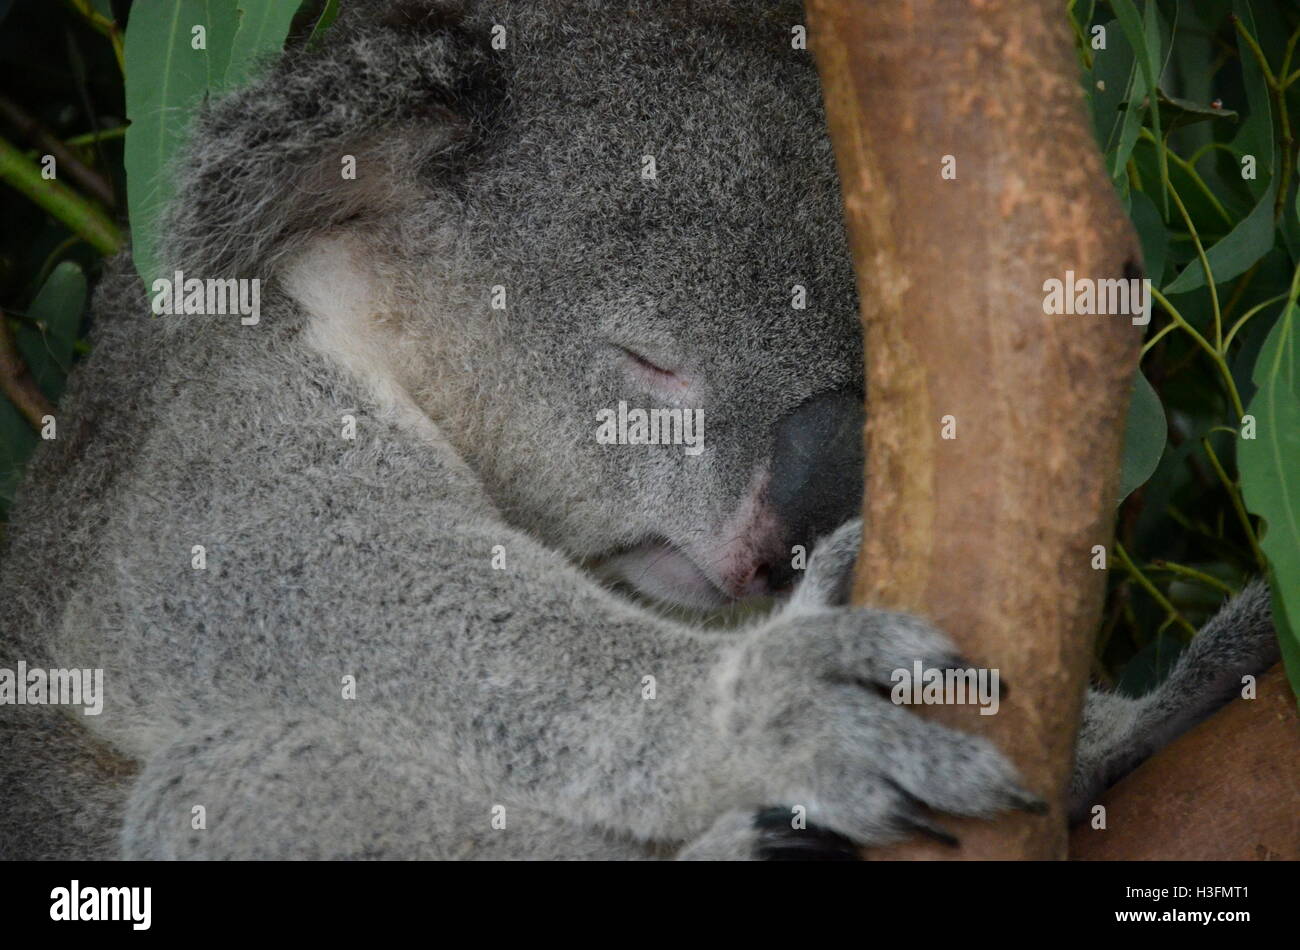 Closeup of a sleeping koala sitting on an eucalyptus tree branch - Australian wildlife. Stock Photo